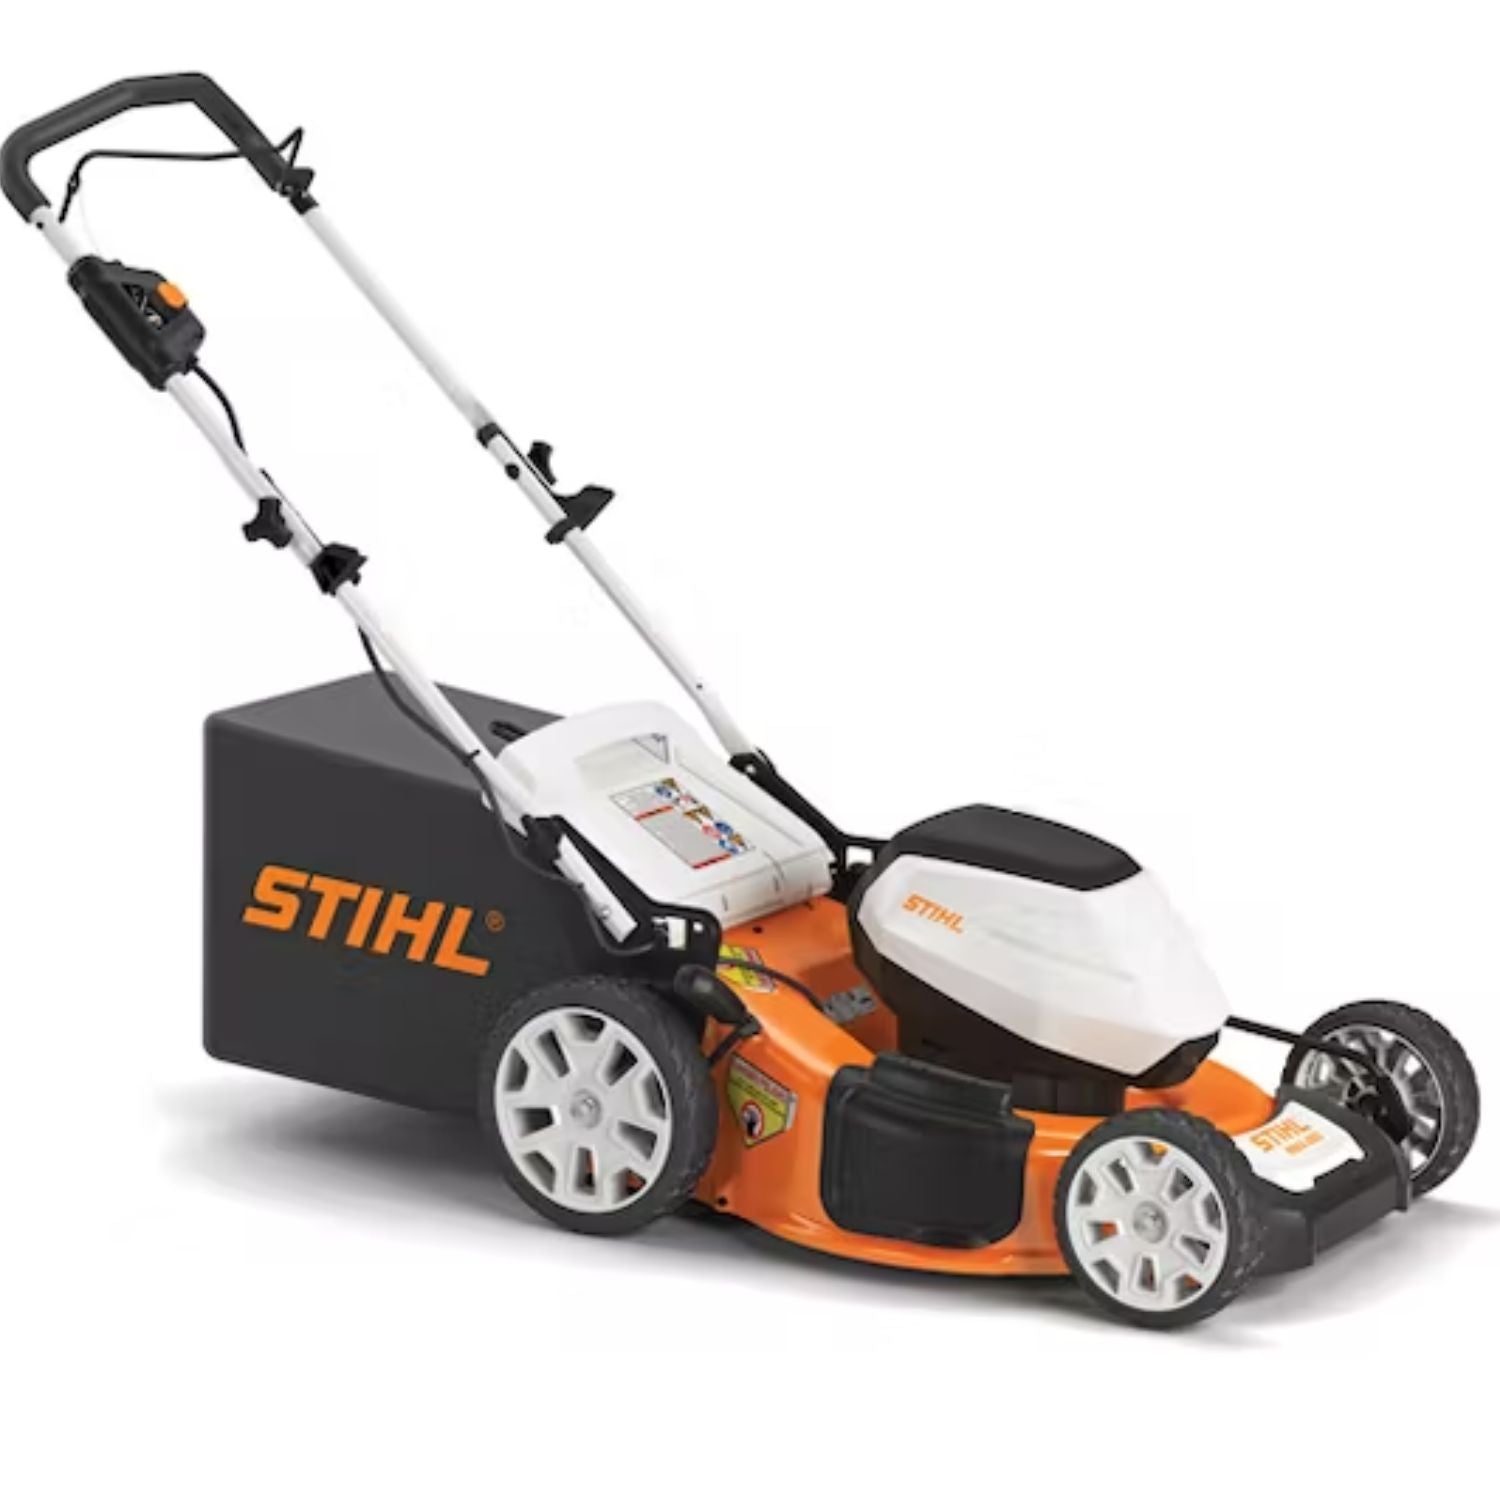 Stihl RMA 460 Cordless Electric Lawn Mower Unit Only - Main Street Mower | Winter Garden, Ocala, Clermont